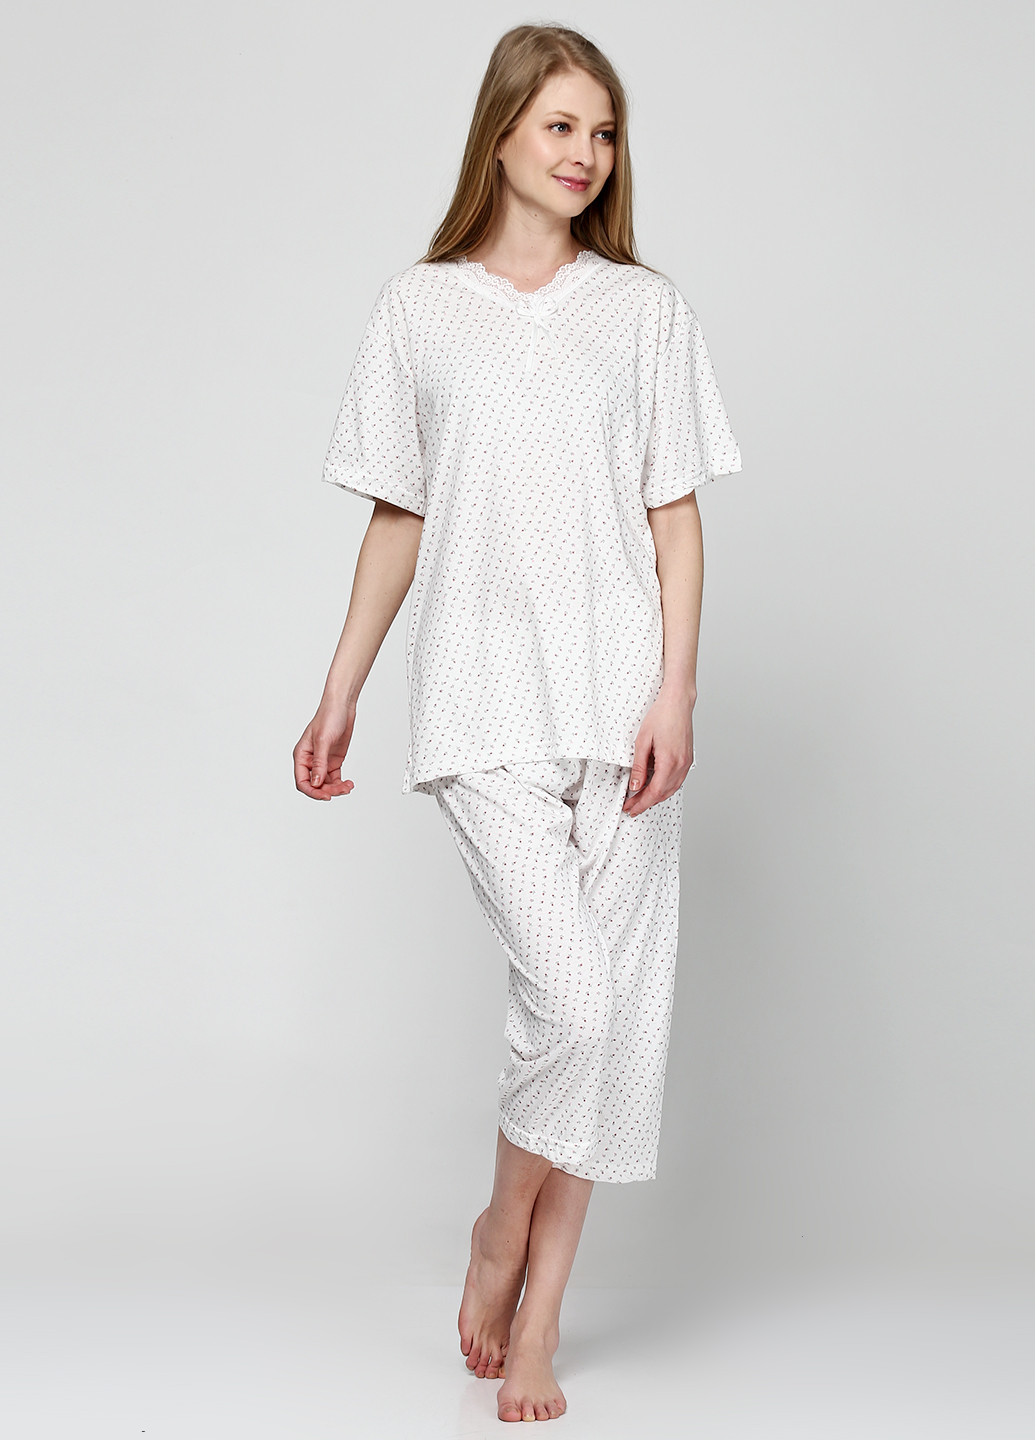 Молочный демисезонный комплект (футболка, капри) Good Night Pajama